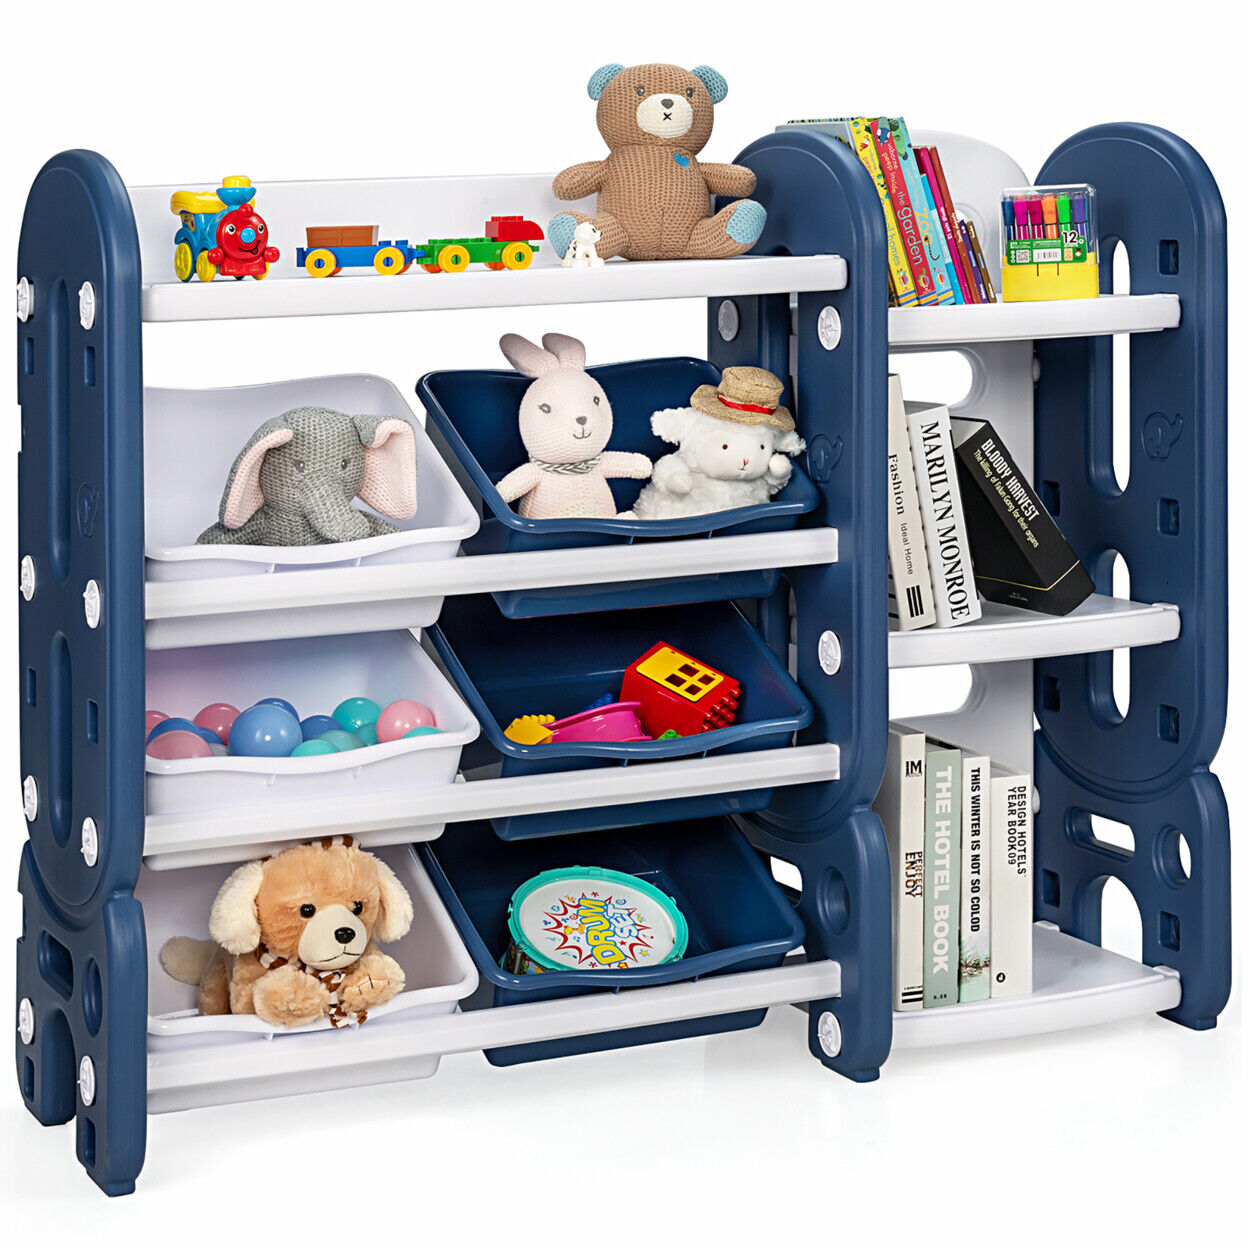 Costway Kids Toy Storage Organizer W/bins And Multi-layer Shelf For Bedroom